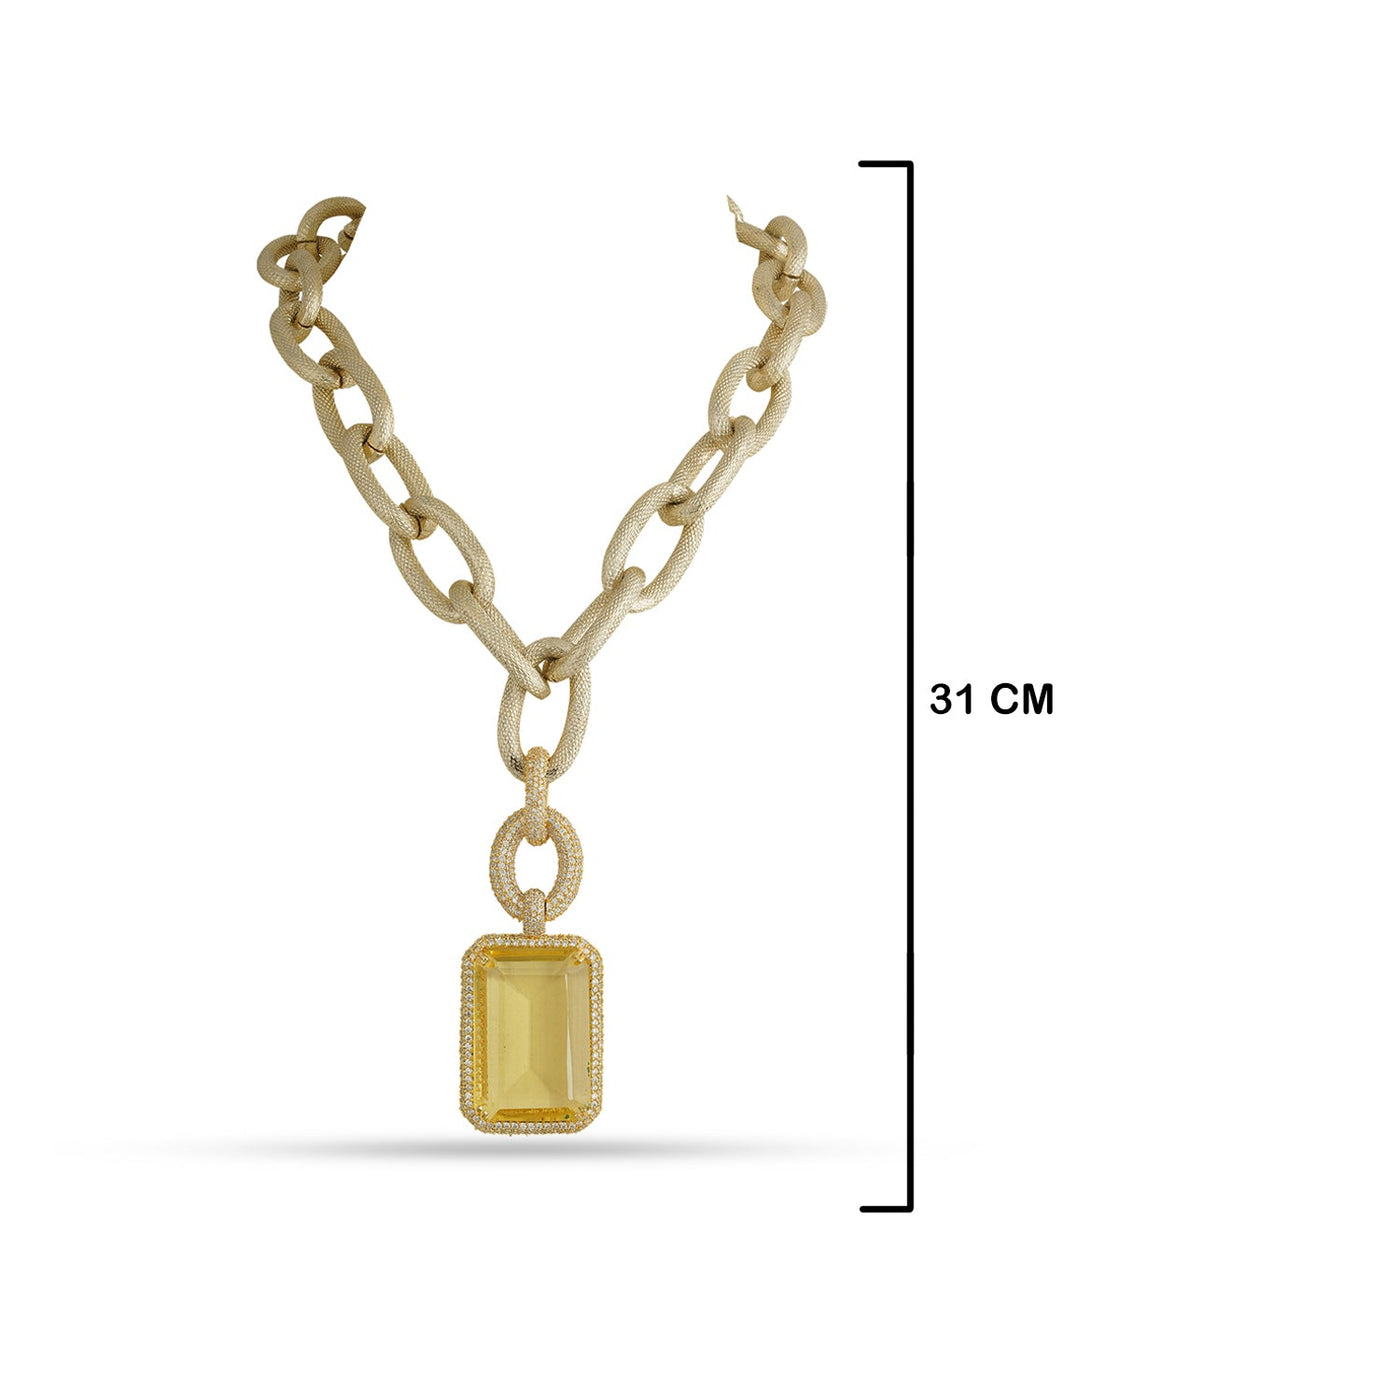 Adrena - Yellow Pendant Chain Necklace